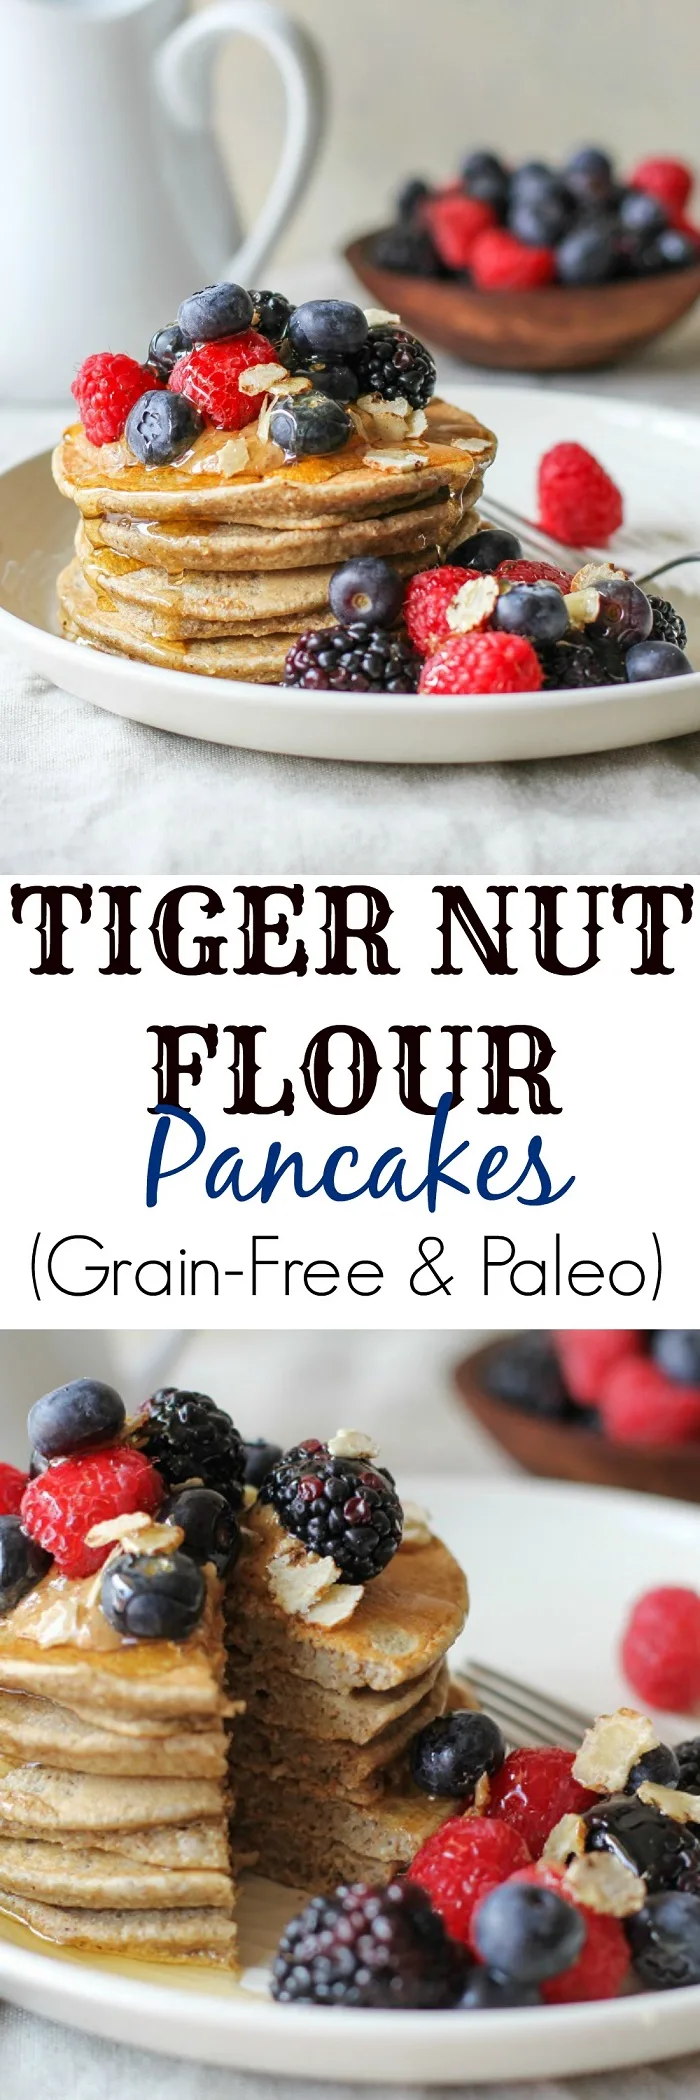 Tiger Nut Flour Pancakes grain-free and paleo | TheRoastedRoot.net #breakfast #recipe #glutenfree